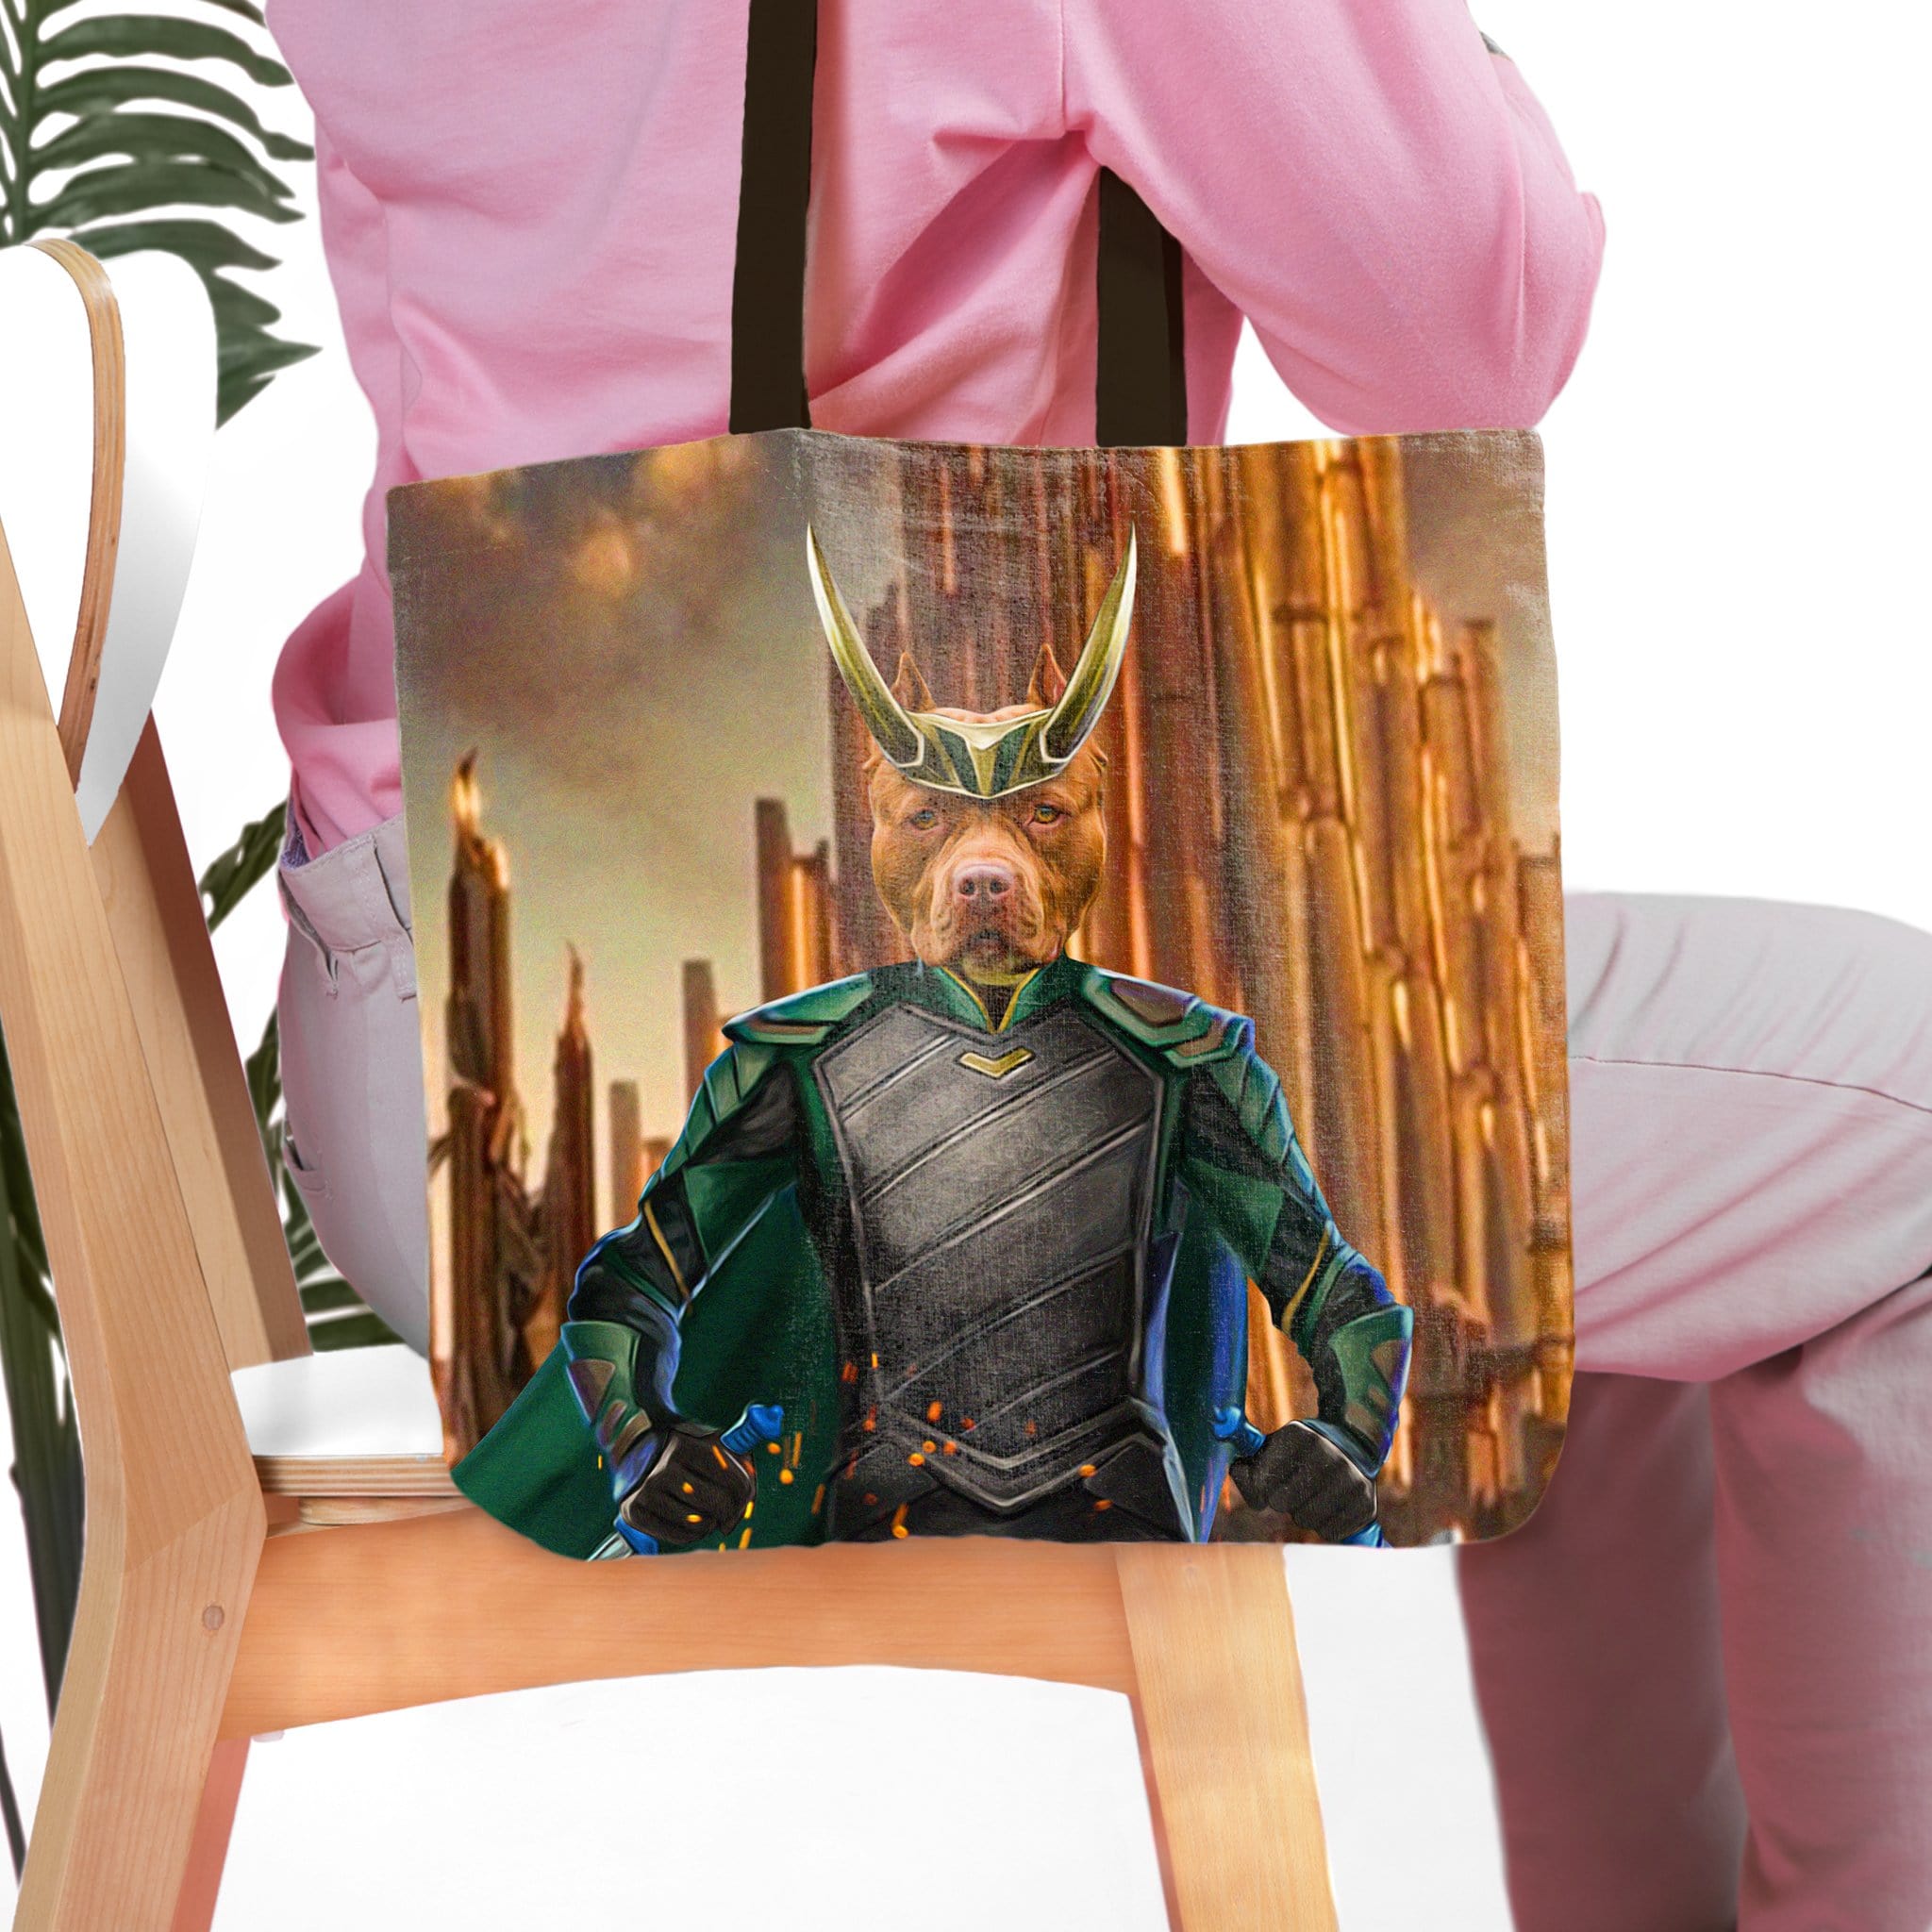 &#39;Loki Doggo&#39; Personalized Tote Bag